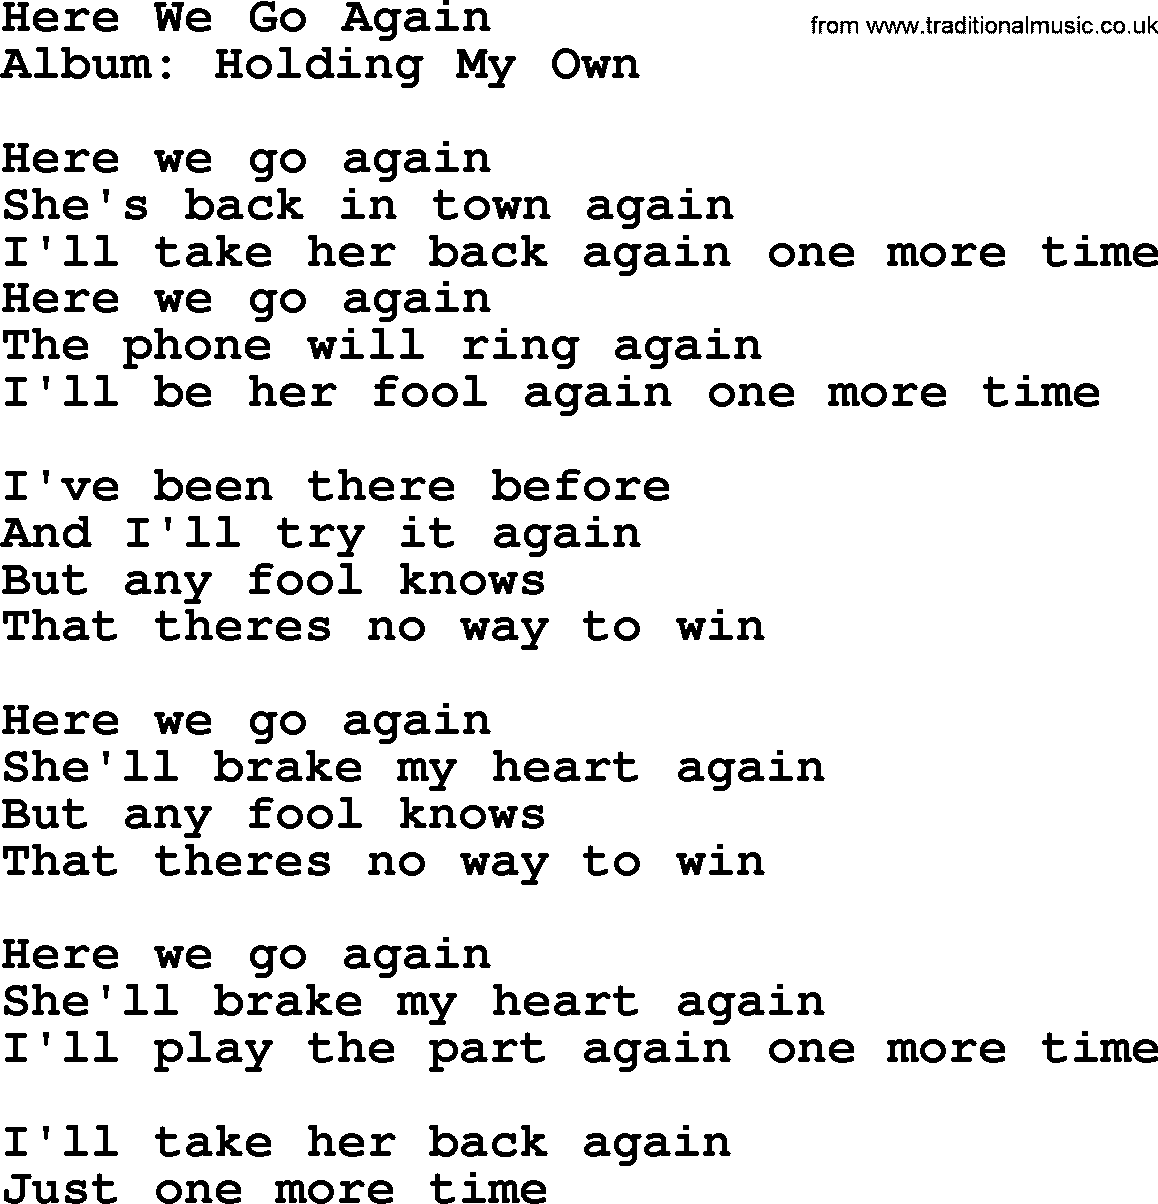 George Strait song: Here We Go Again, lyrics